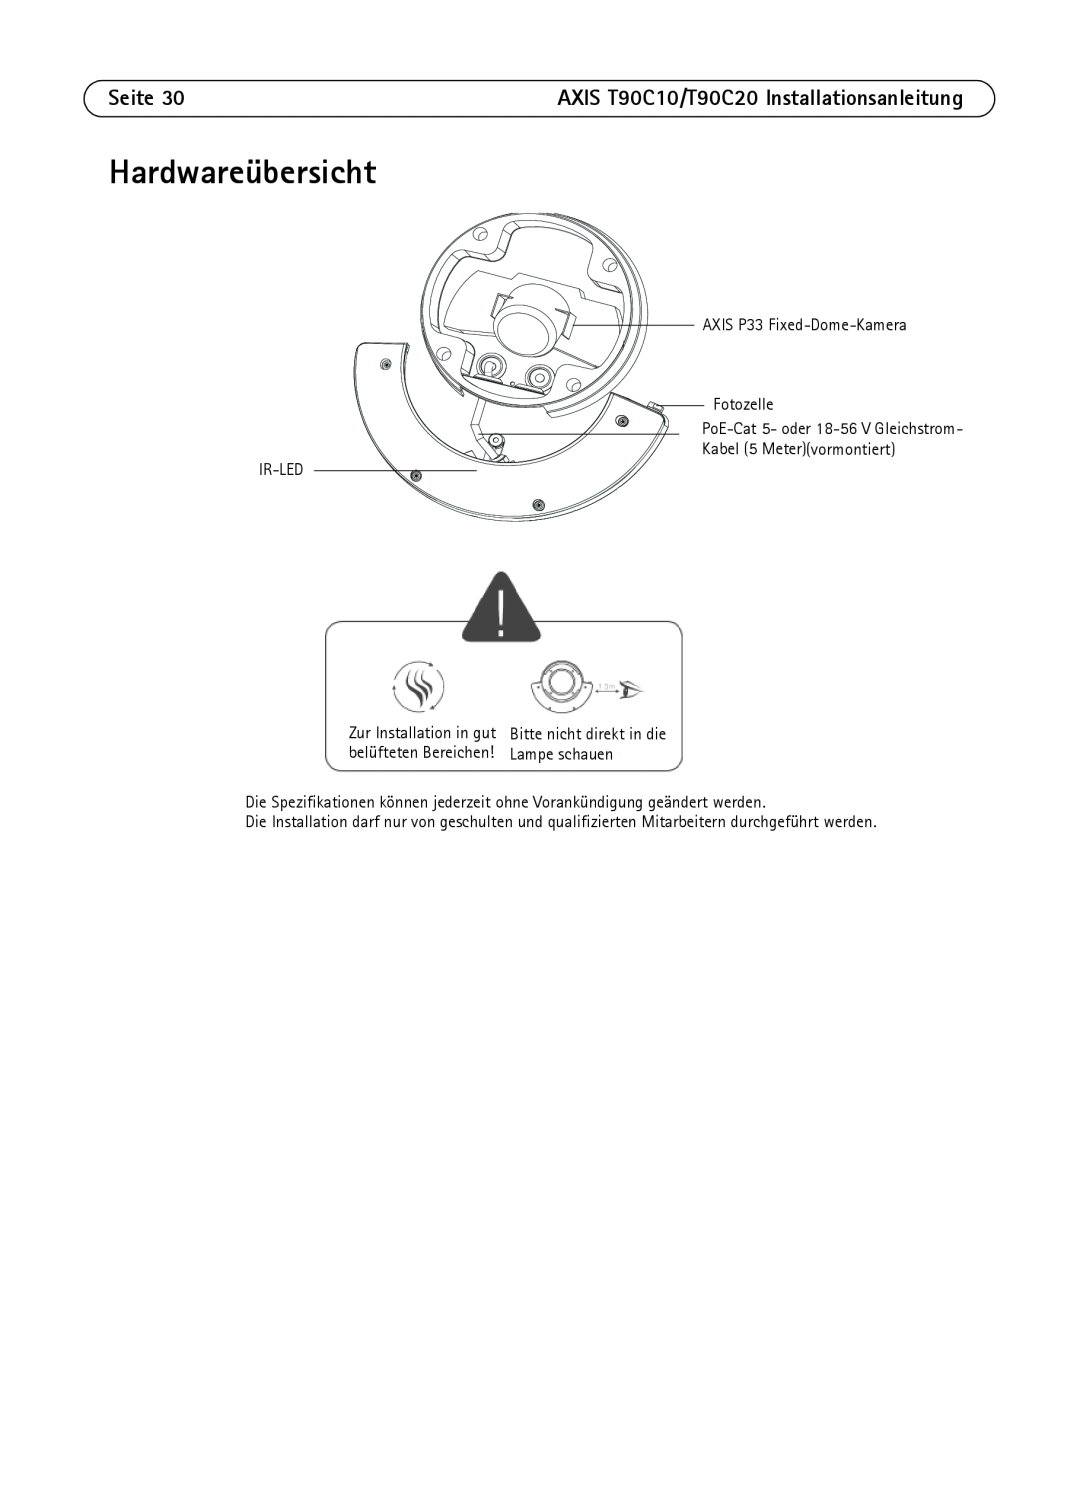 Axis Communications manual Hardwareübersicht, Seite, AXIS T90C10/T90C20 Installationsanleitung 